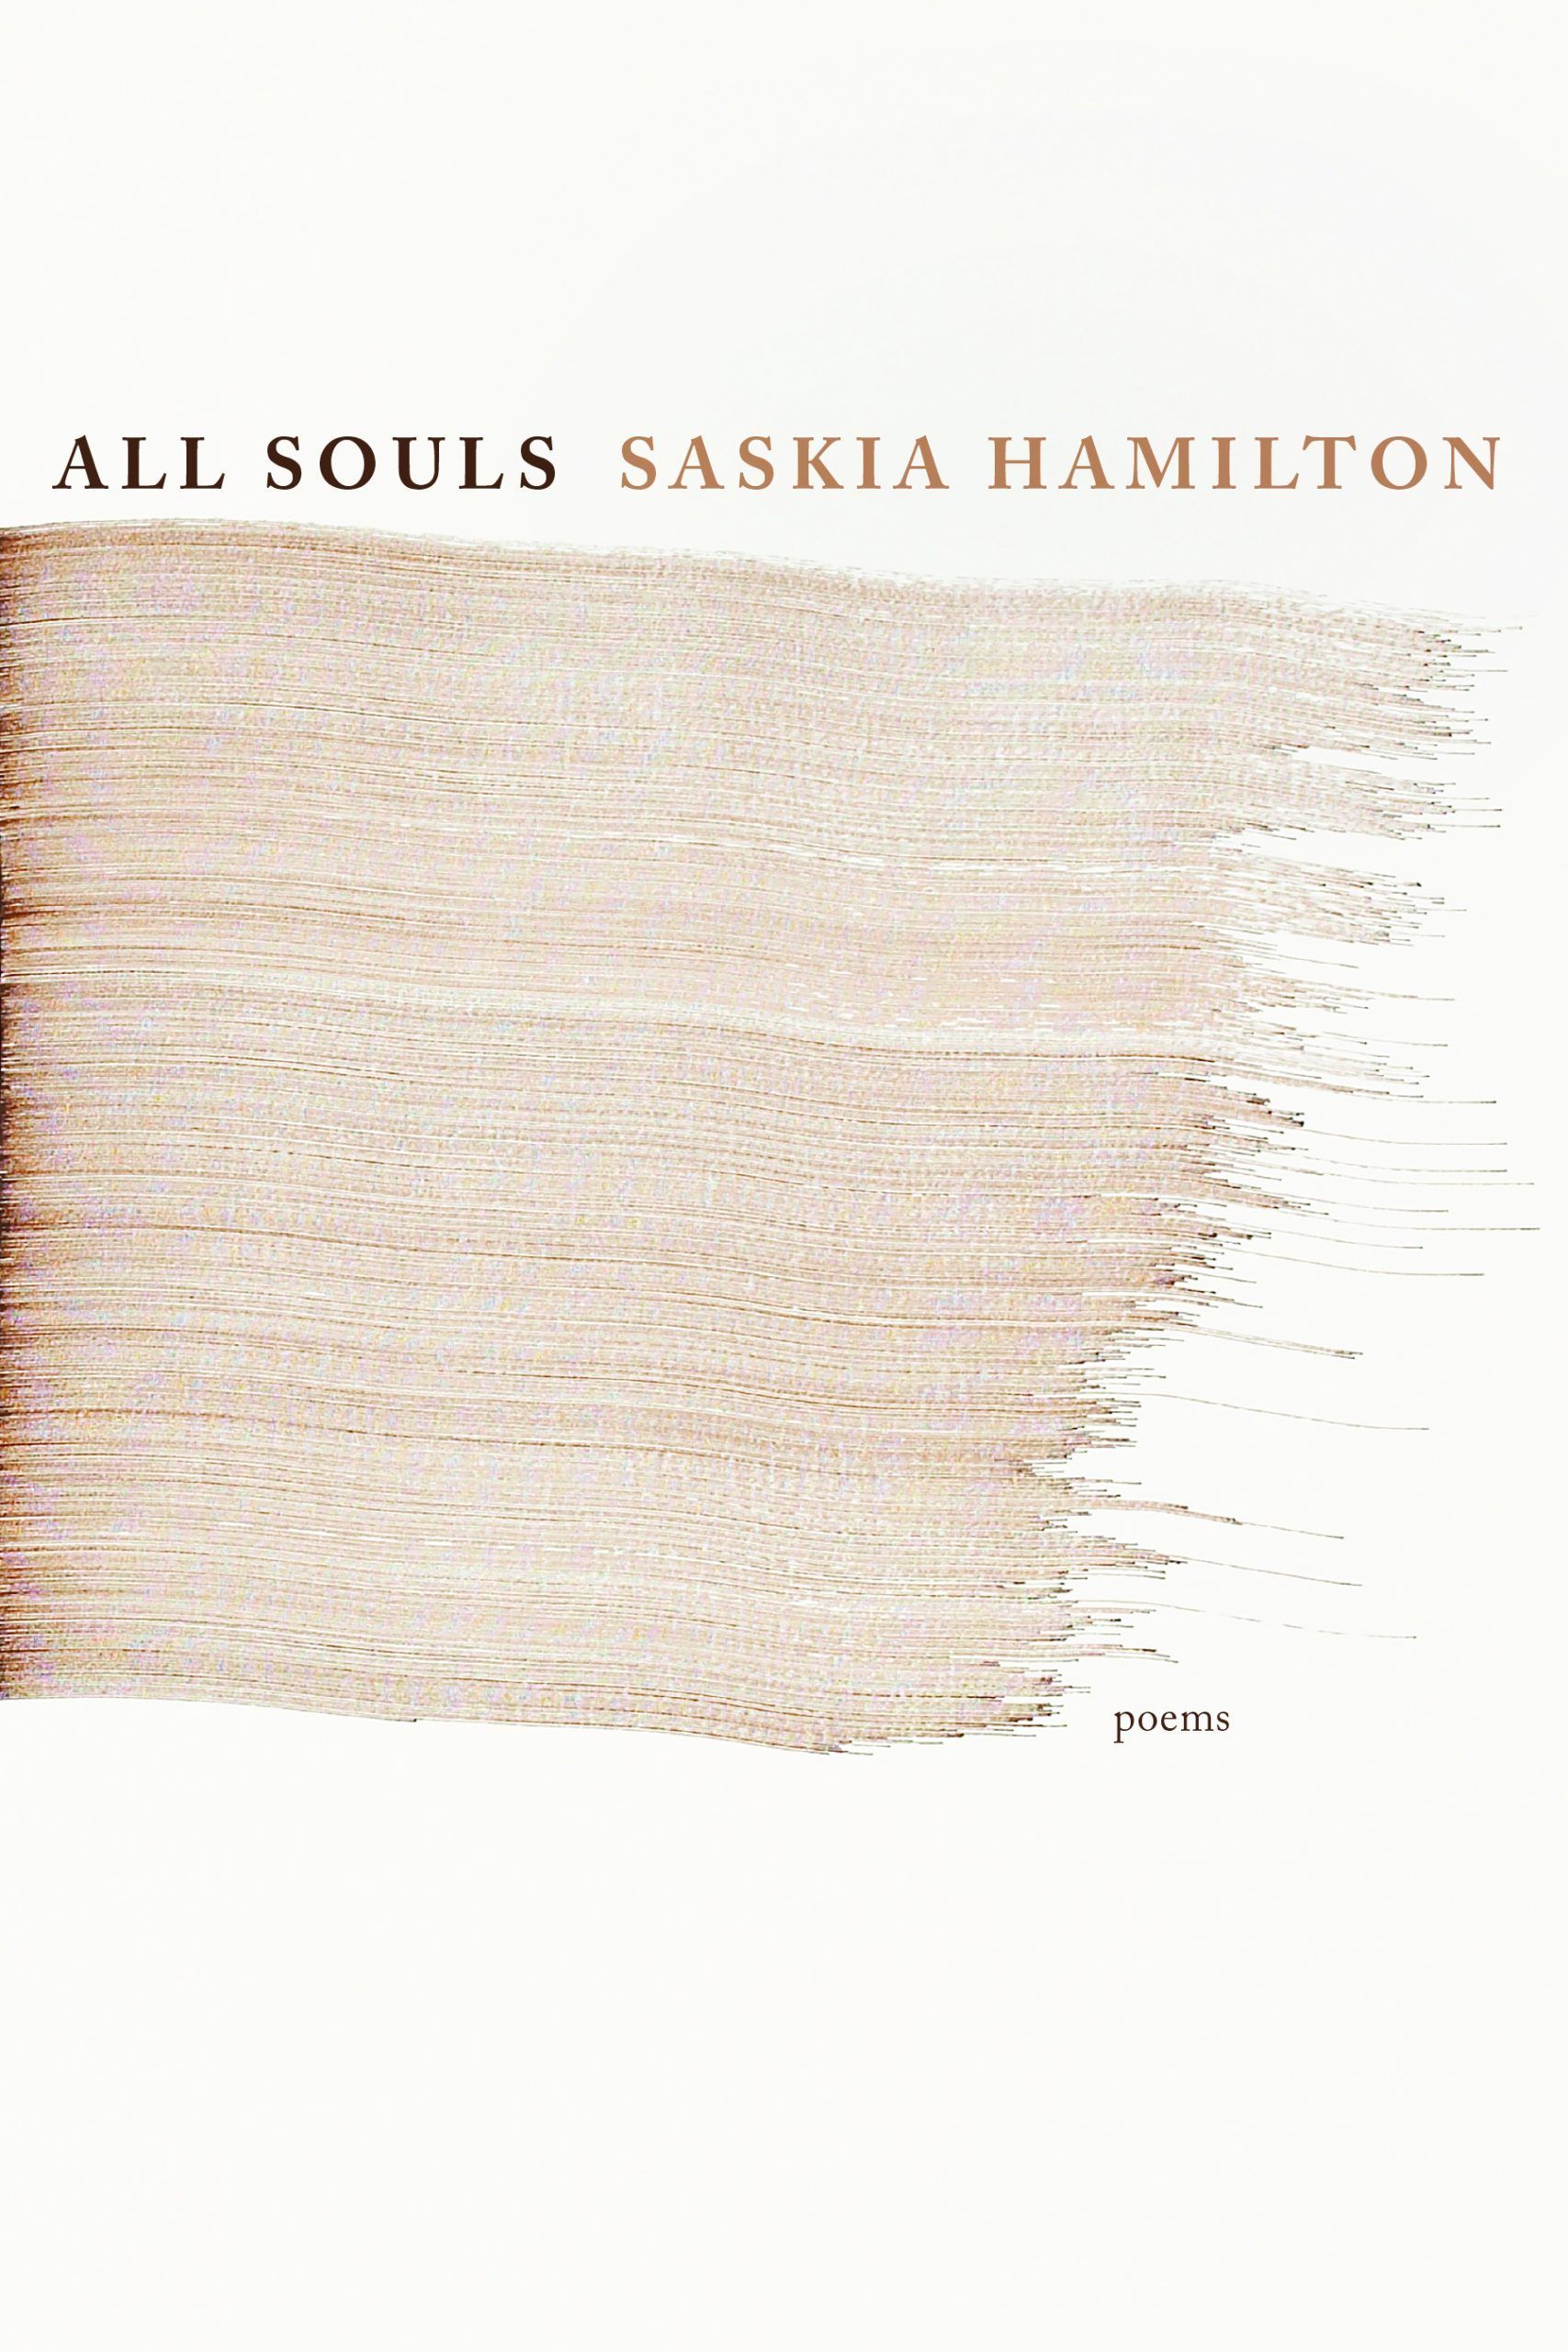 What Practice Will Help Prepare Me: On Saskia Hamilton’s “All Souls”